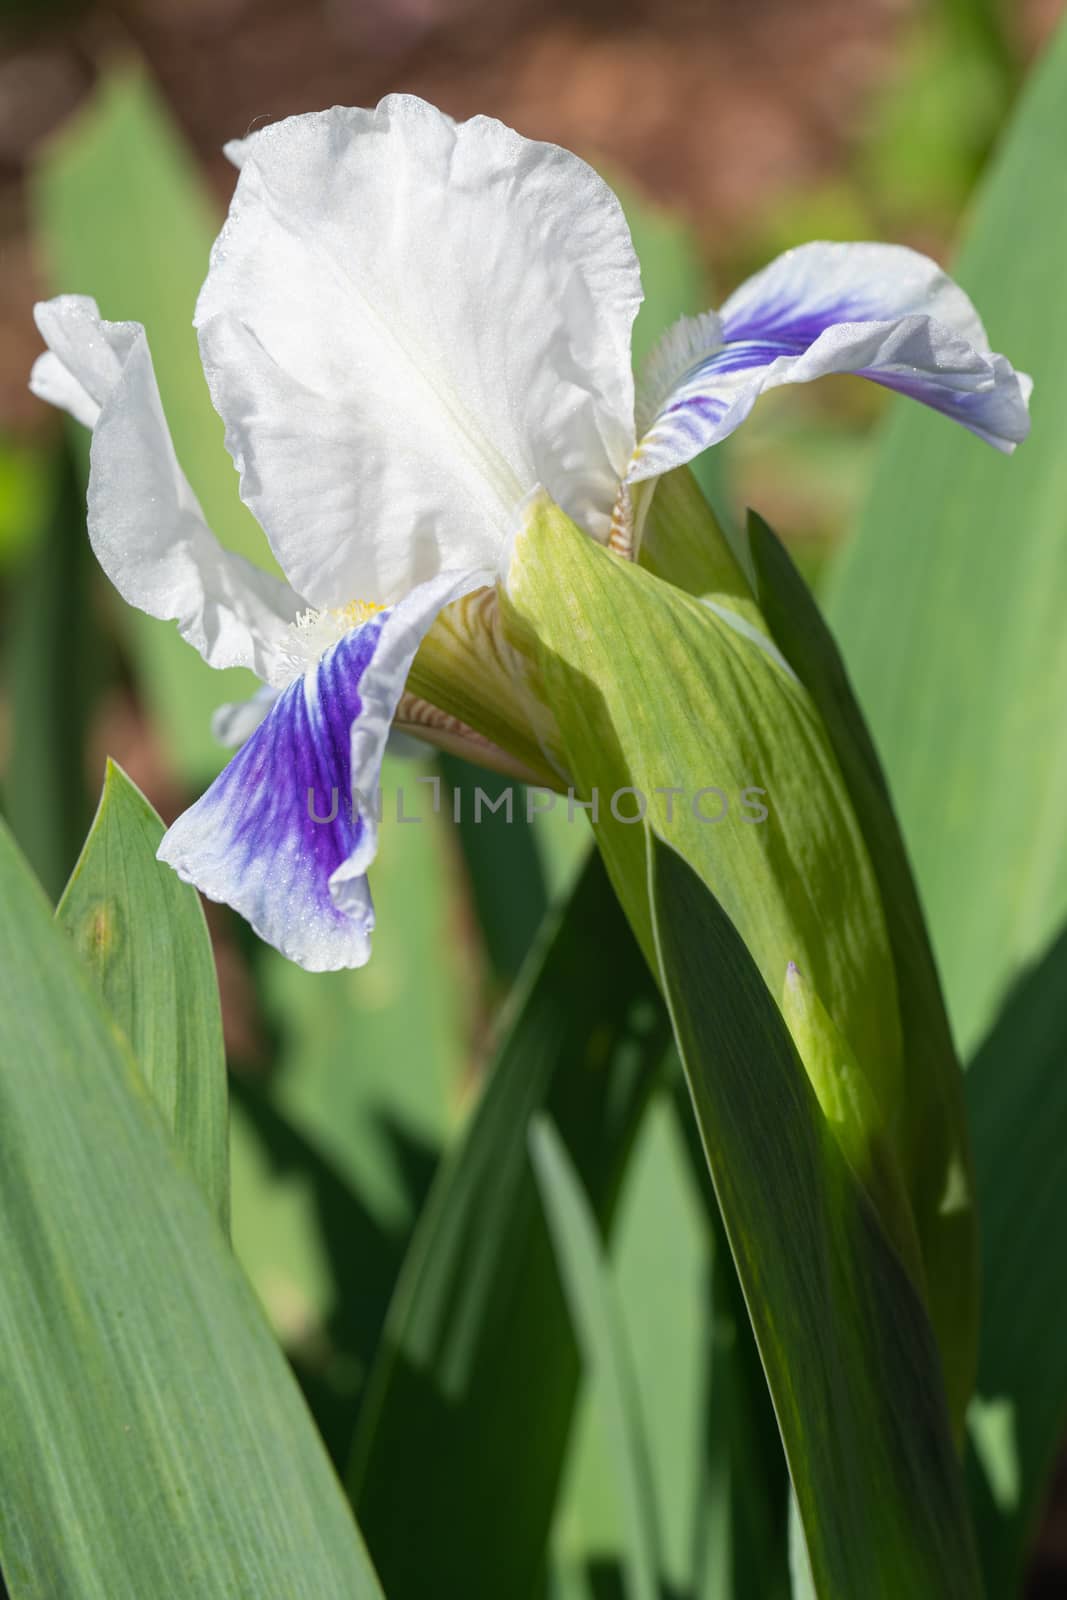 German iris, Iris barbata-nana by alfotokunst